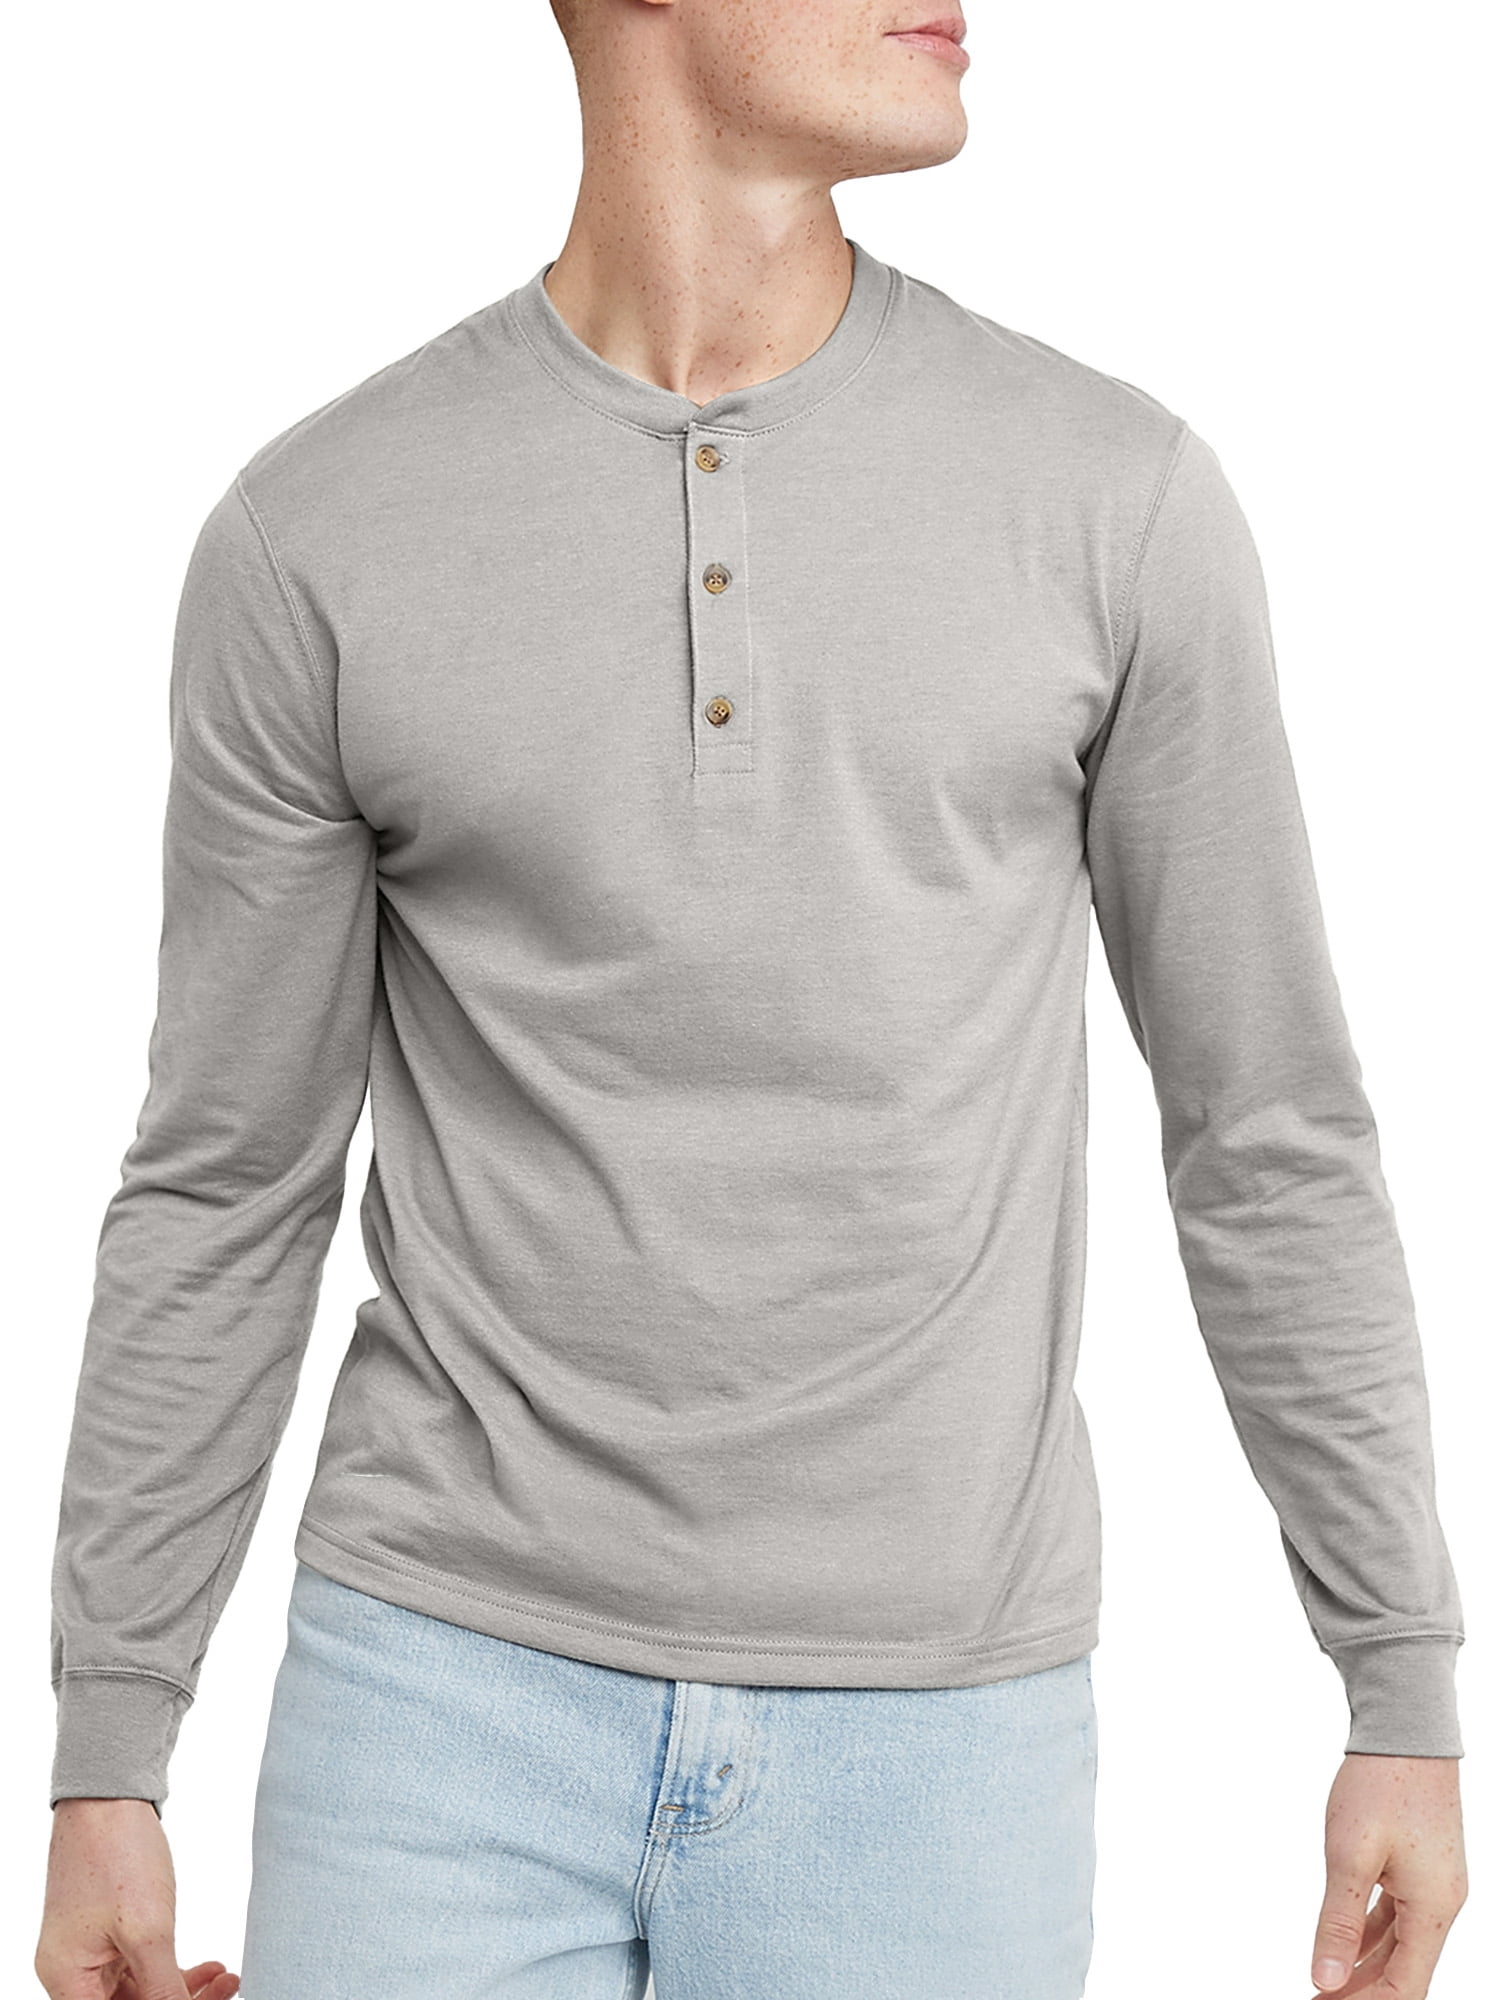 Hanes Originals Men's Cotton Long Sleeve Henley T-Shirt White M